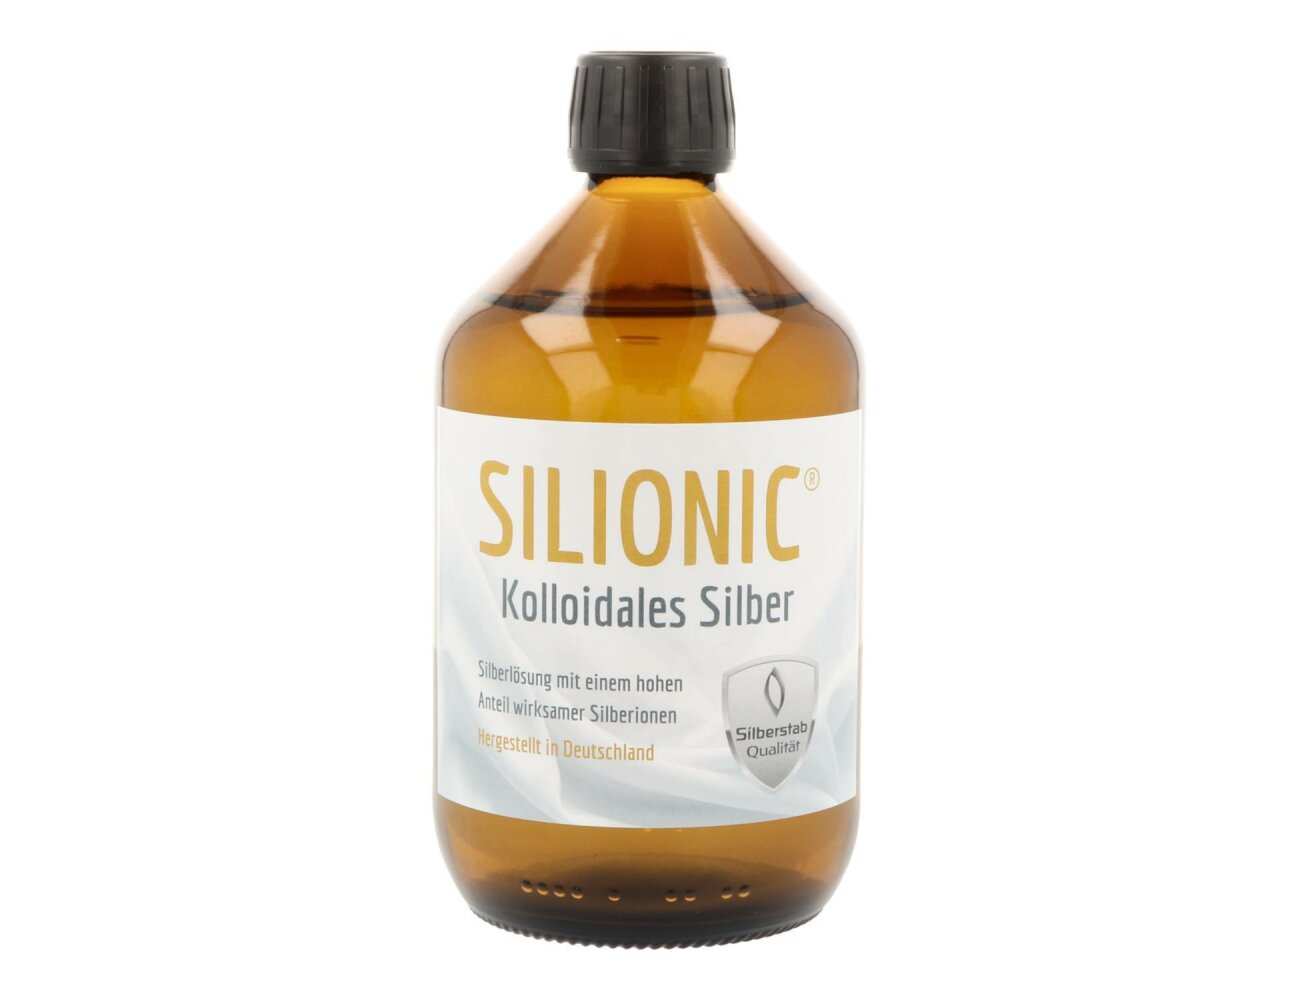 Silionic Kolloidales Silber, 25 ppm, 500 ml